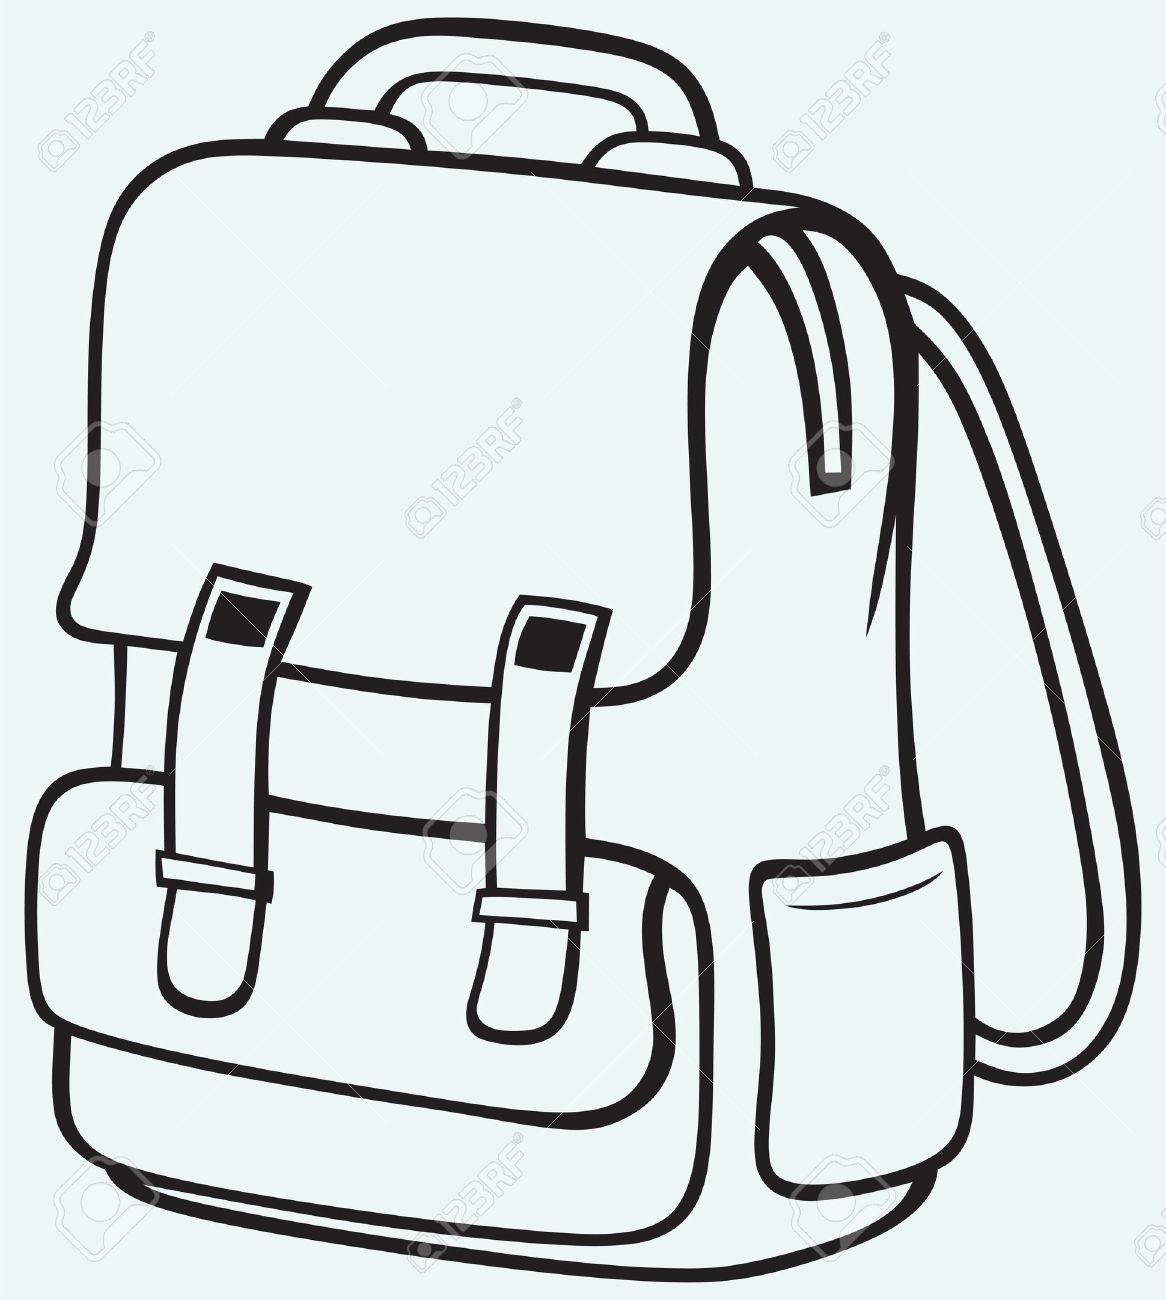 School Bag Stock Vector by ©stockshoppe 9245521